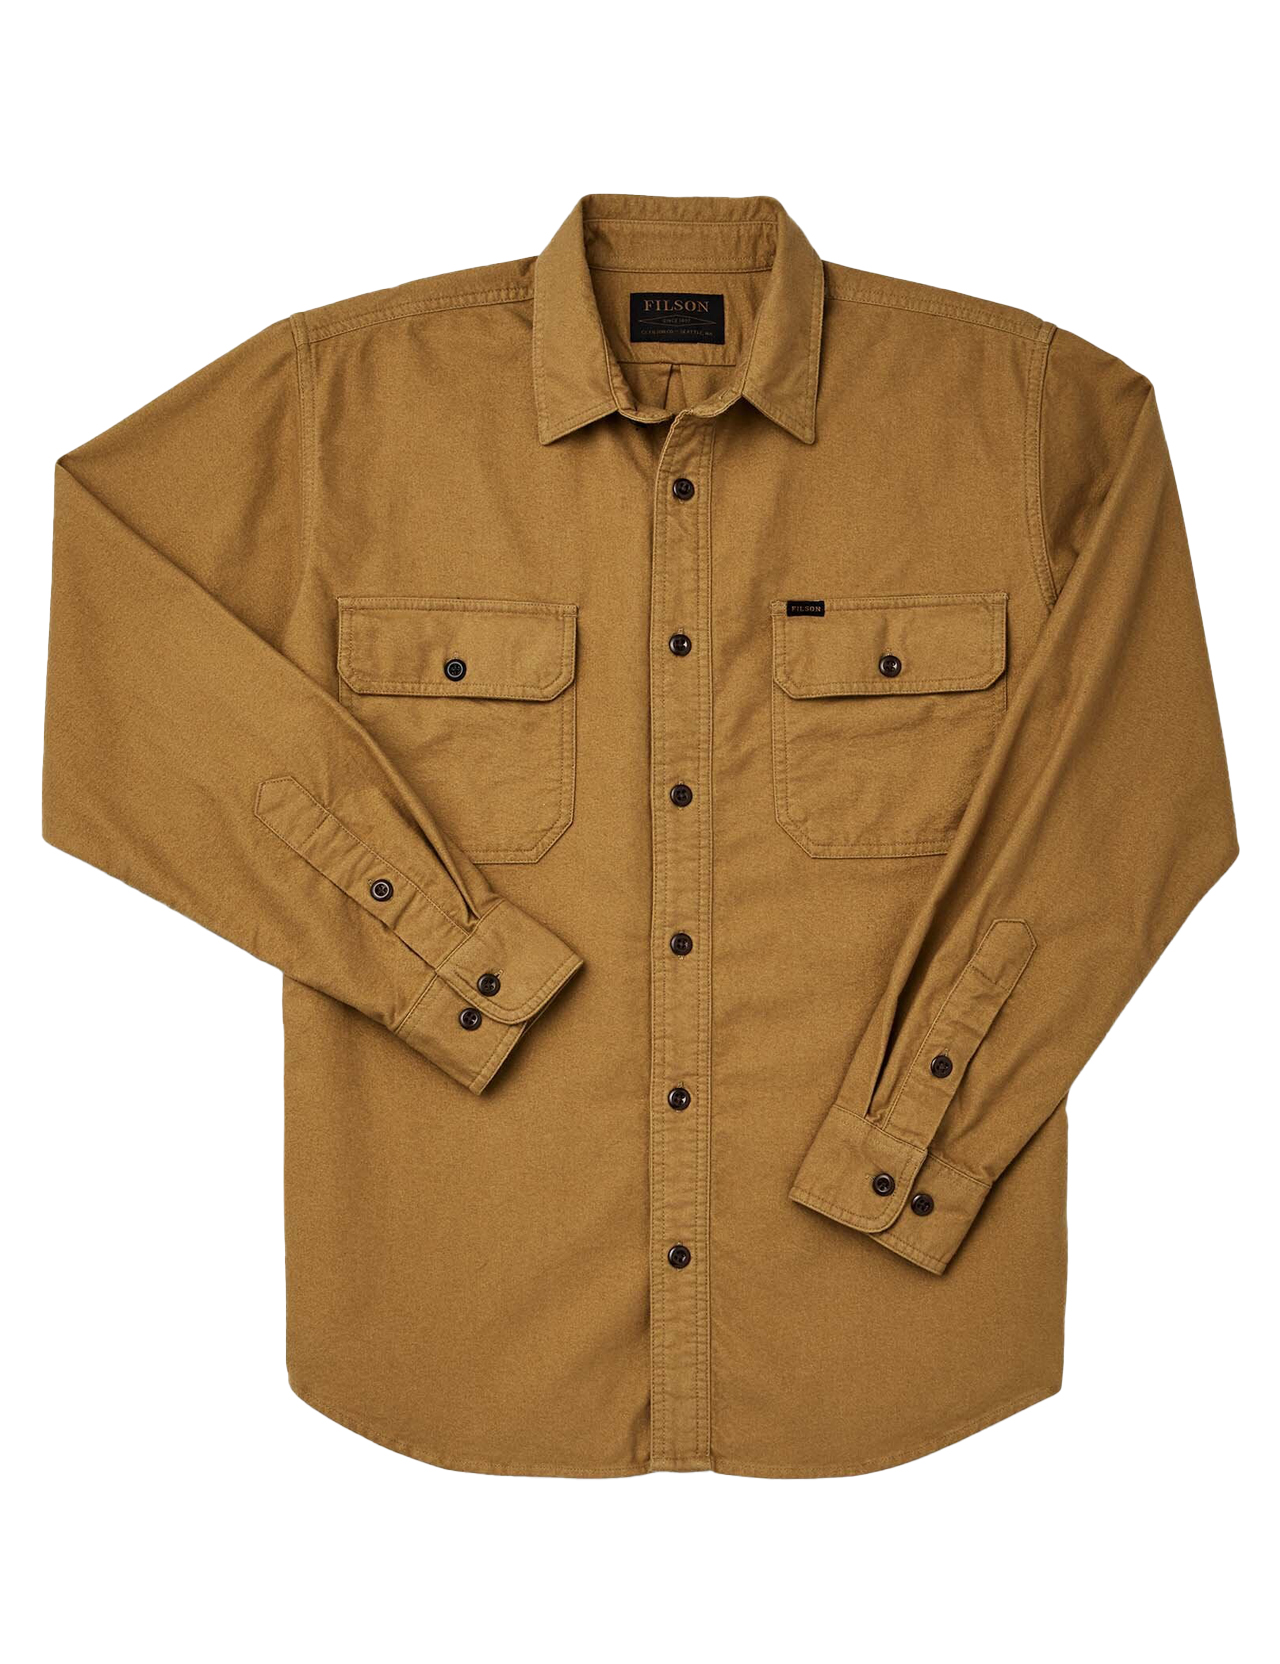 Filson - Field Flannel Shirt - Nubuck Tan